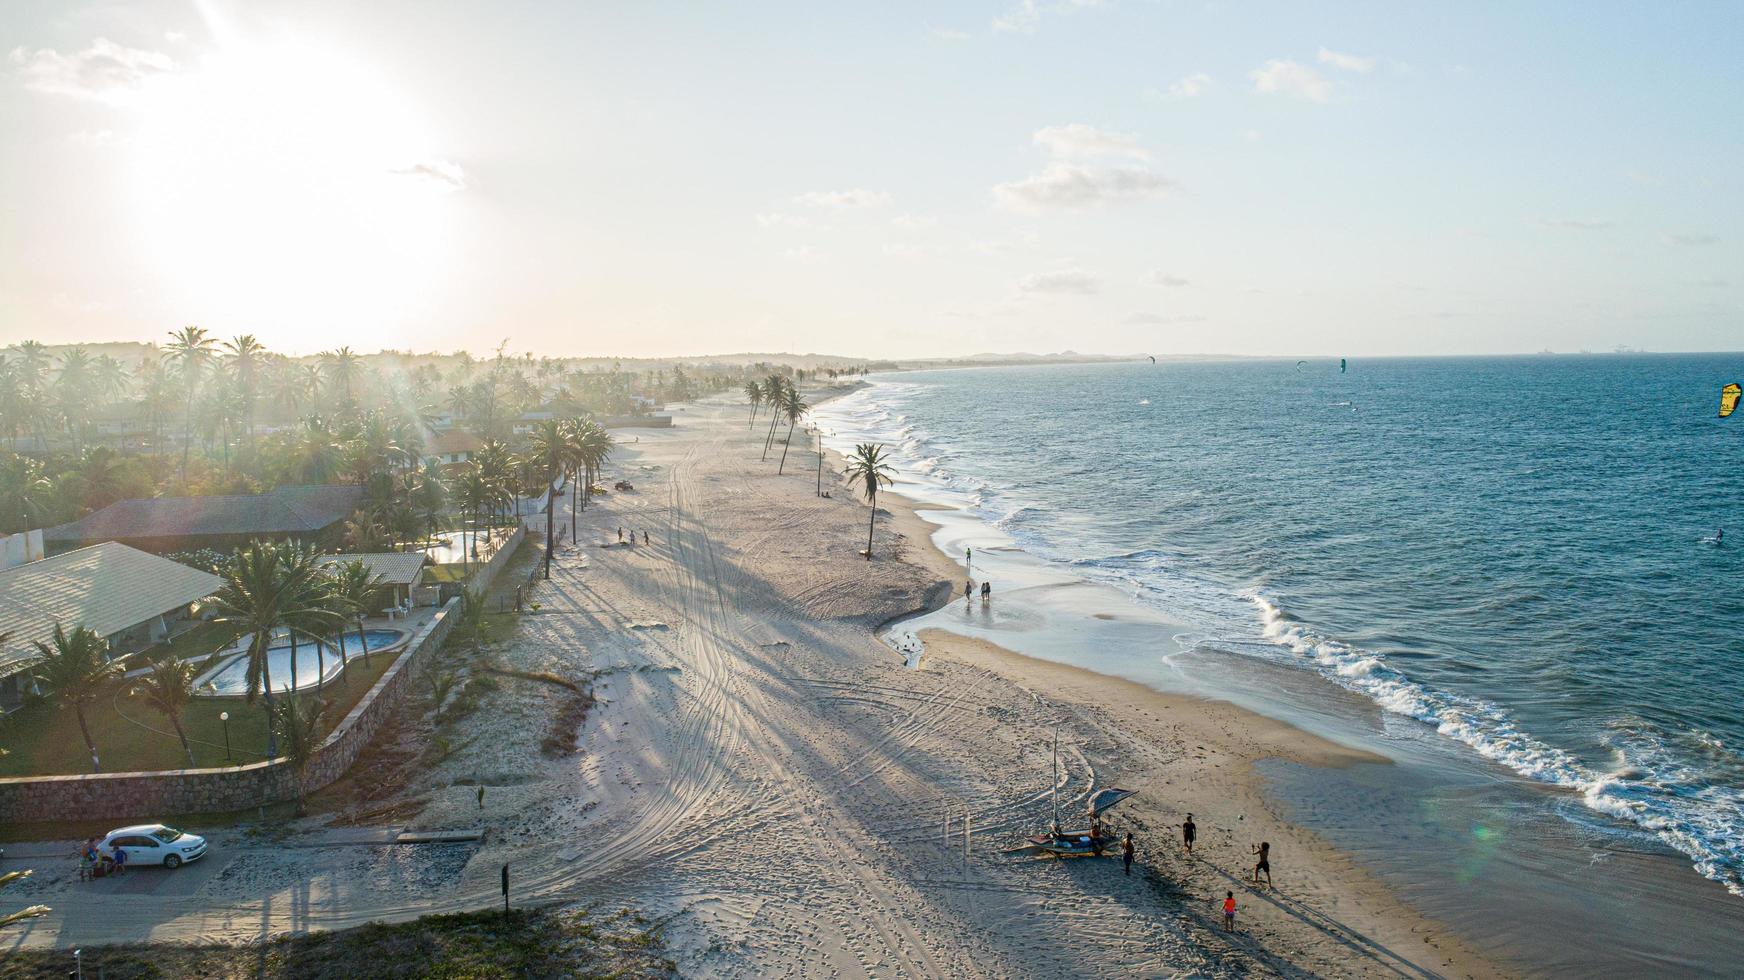 cumbuco, ceara, brasile, settembre 2019 - giornata di sole sulla spiaggia di cumbuco foto